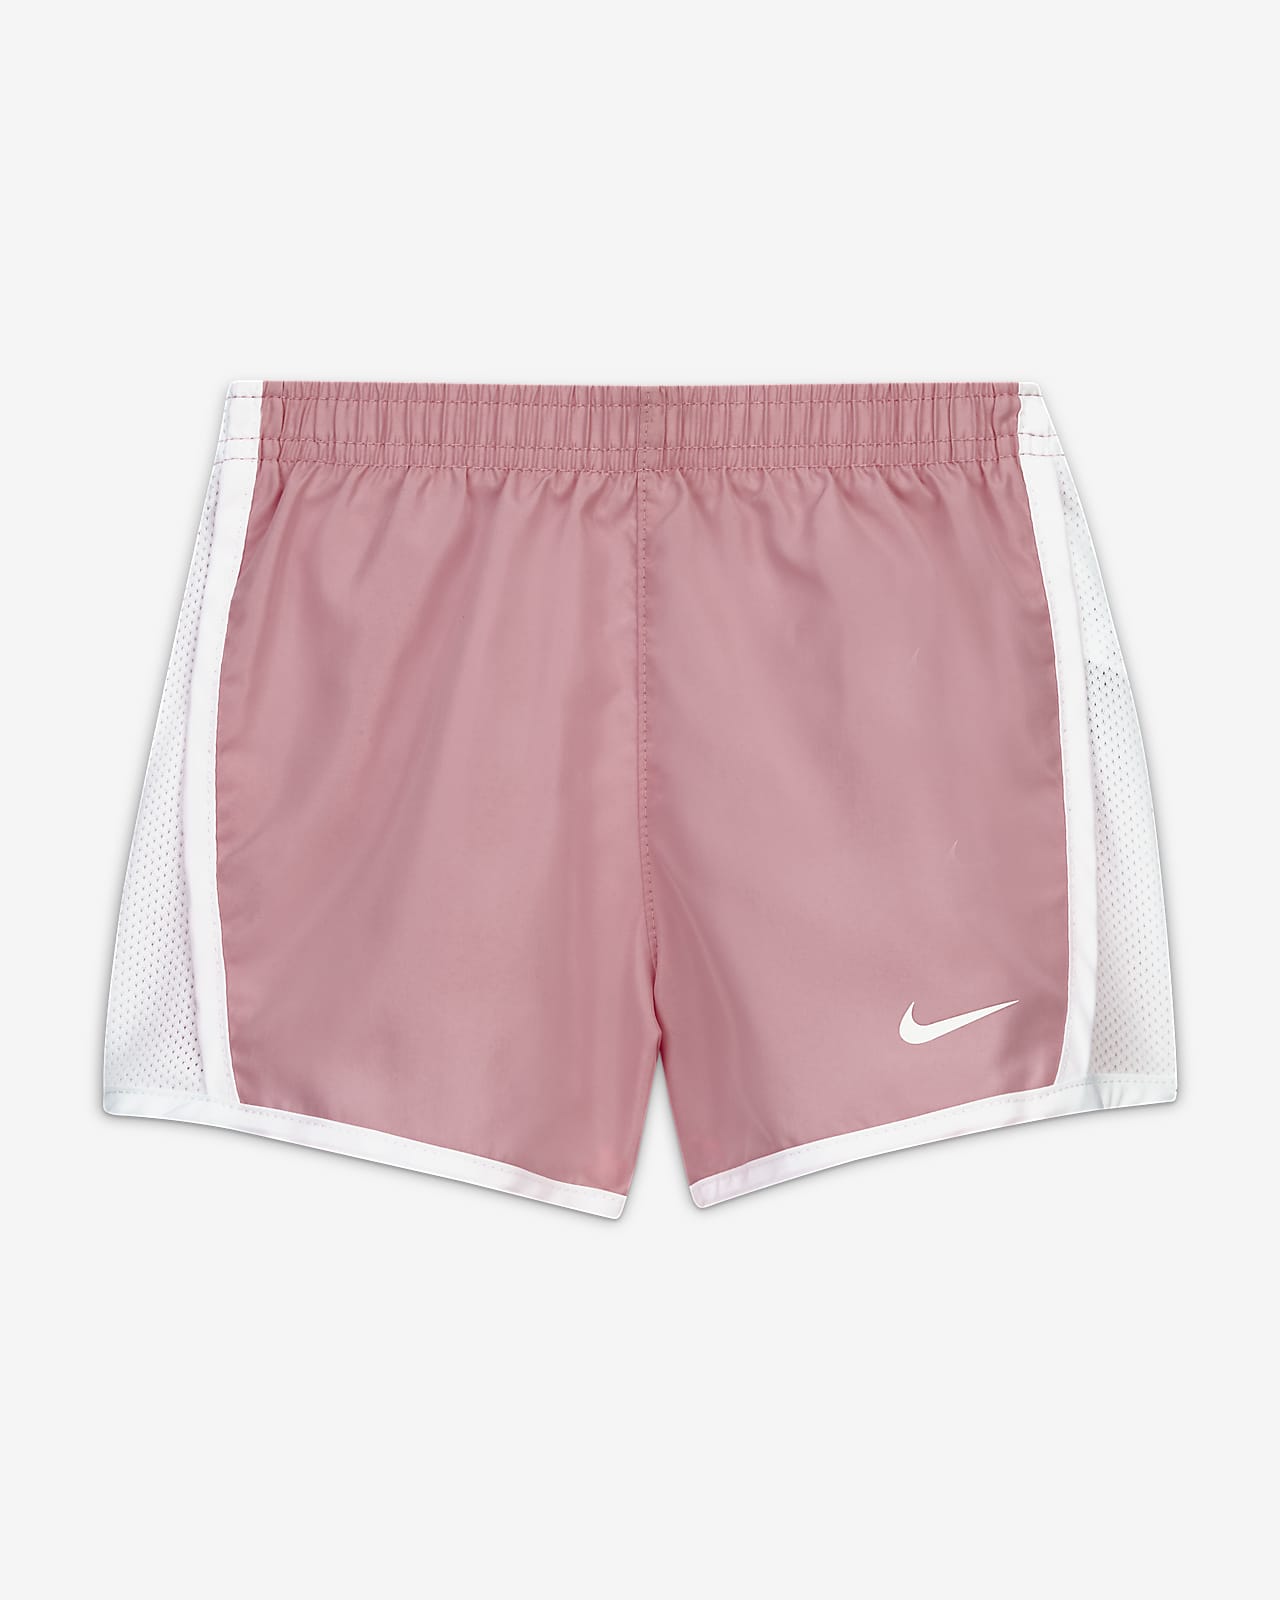 nike dri fit shorts pink